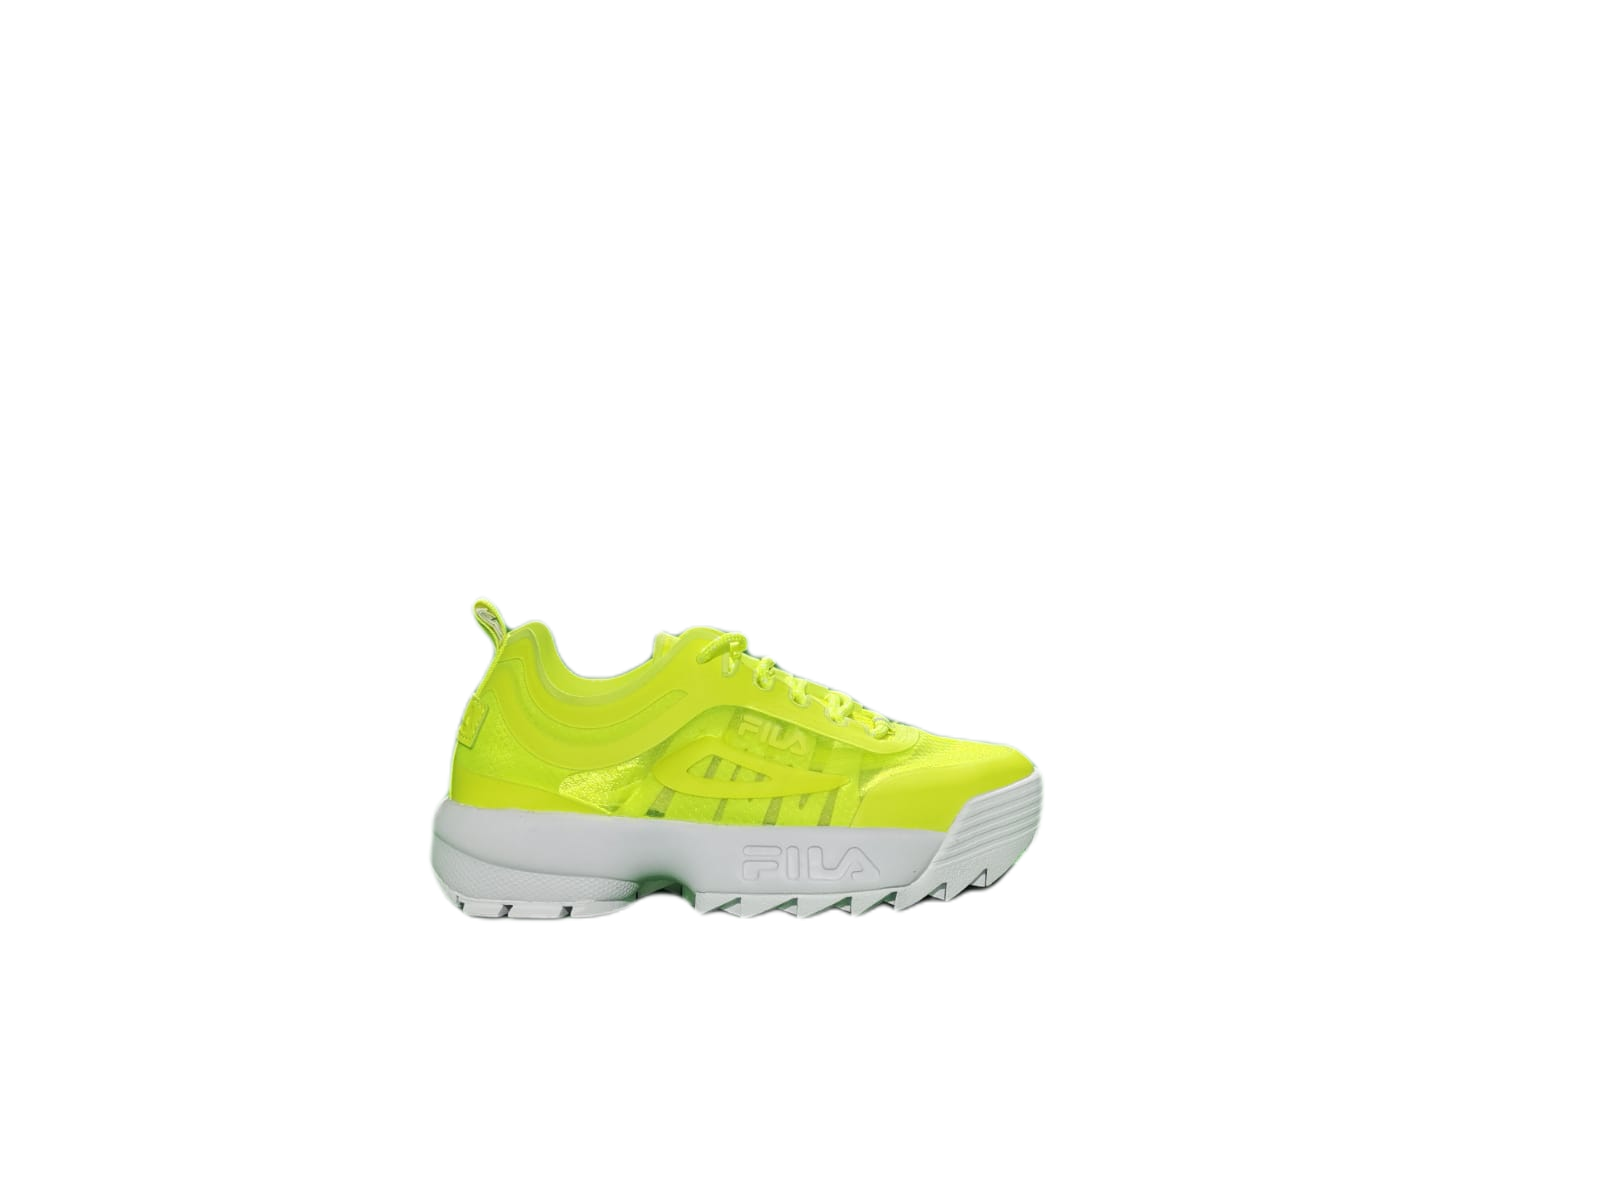 Scarpa Fila Disruptor Run Wmn Giallo Fluo Donna Uomo Sneakers 1010866.60M |  eBay